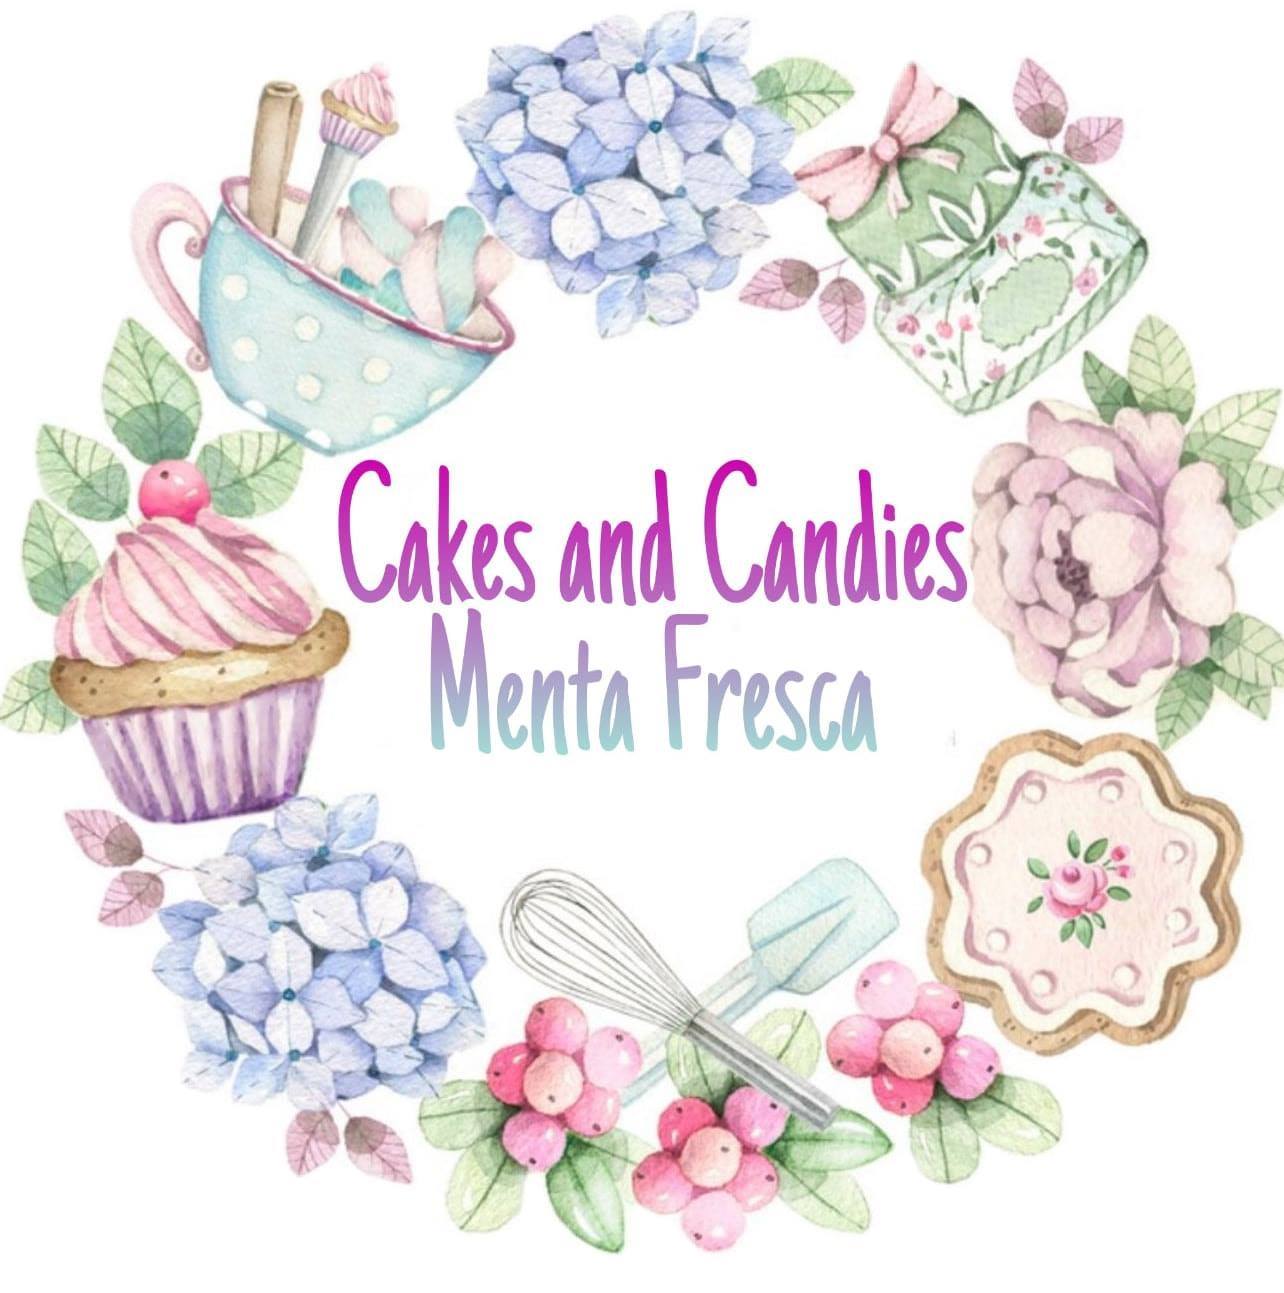  Cakes & Candies - Menta Fresca